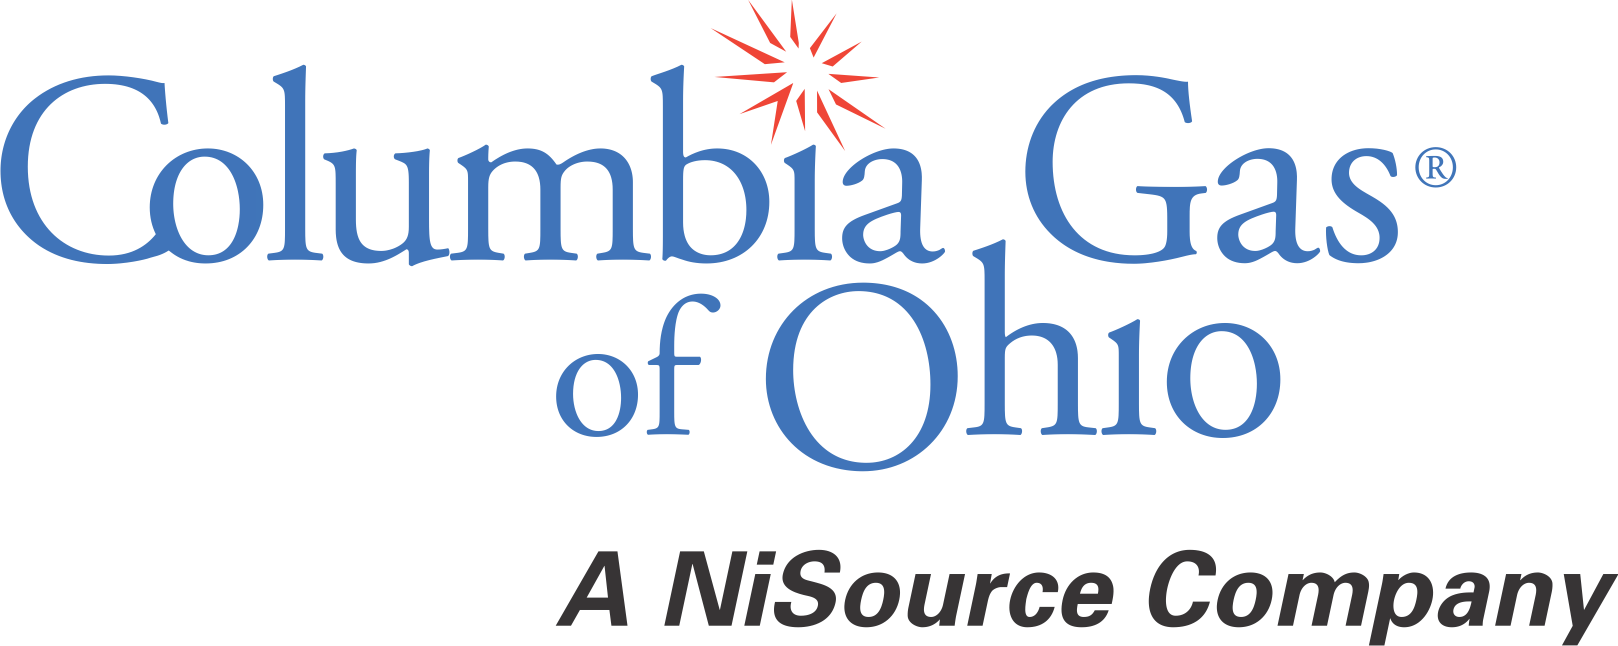 Columbia Gas of Ohio Company Logo